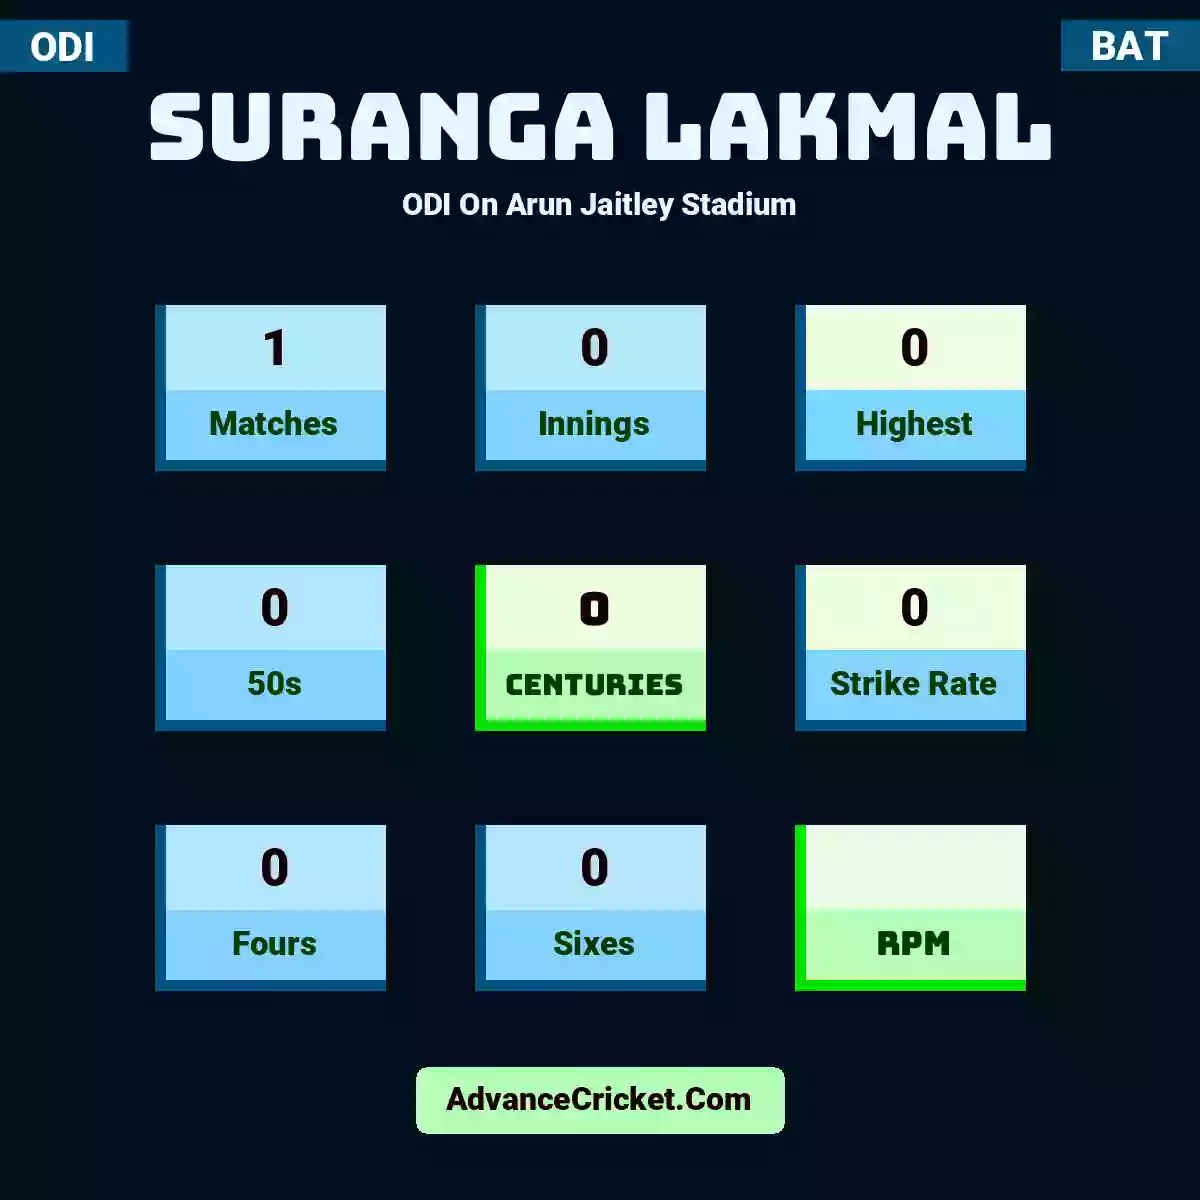 Suranga Lakmal ODI  On Arun Jaitley Stadium, Suranga Lakmal played 1 matches, scored 0 runs as highest, 0 half-centuries, and 0 centuries, with a strike rate of 0. S.Lakmal hit 0 fours and 0 sixes.